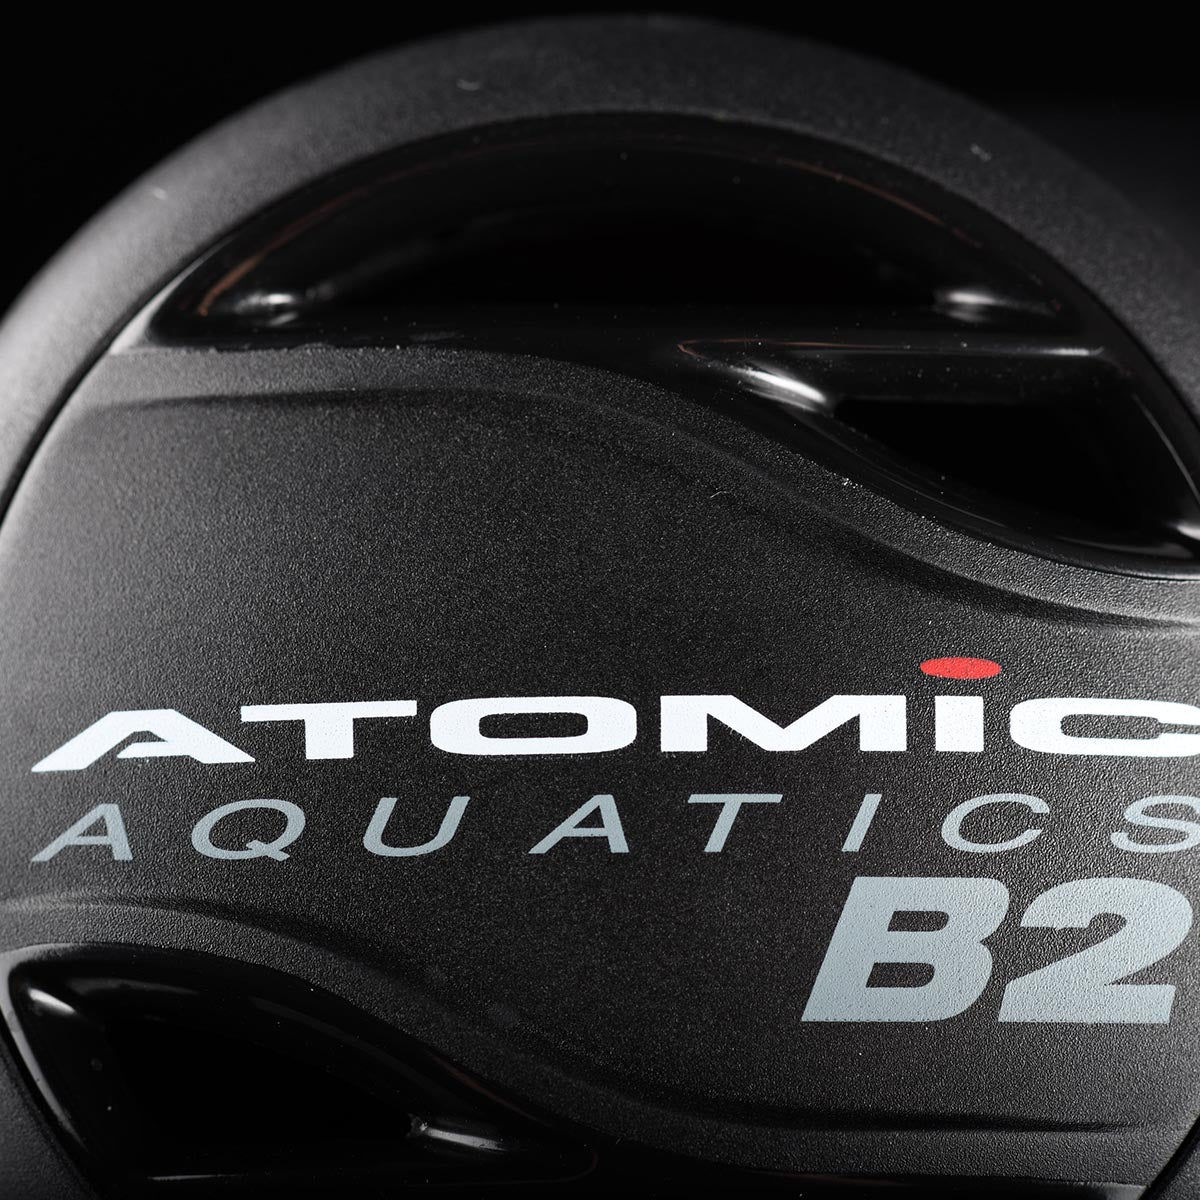 Atomic Aquatics B2 Regulator Set with Color Kit Included